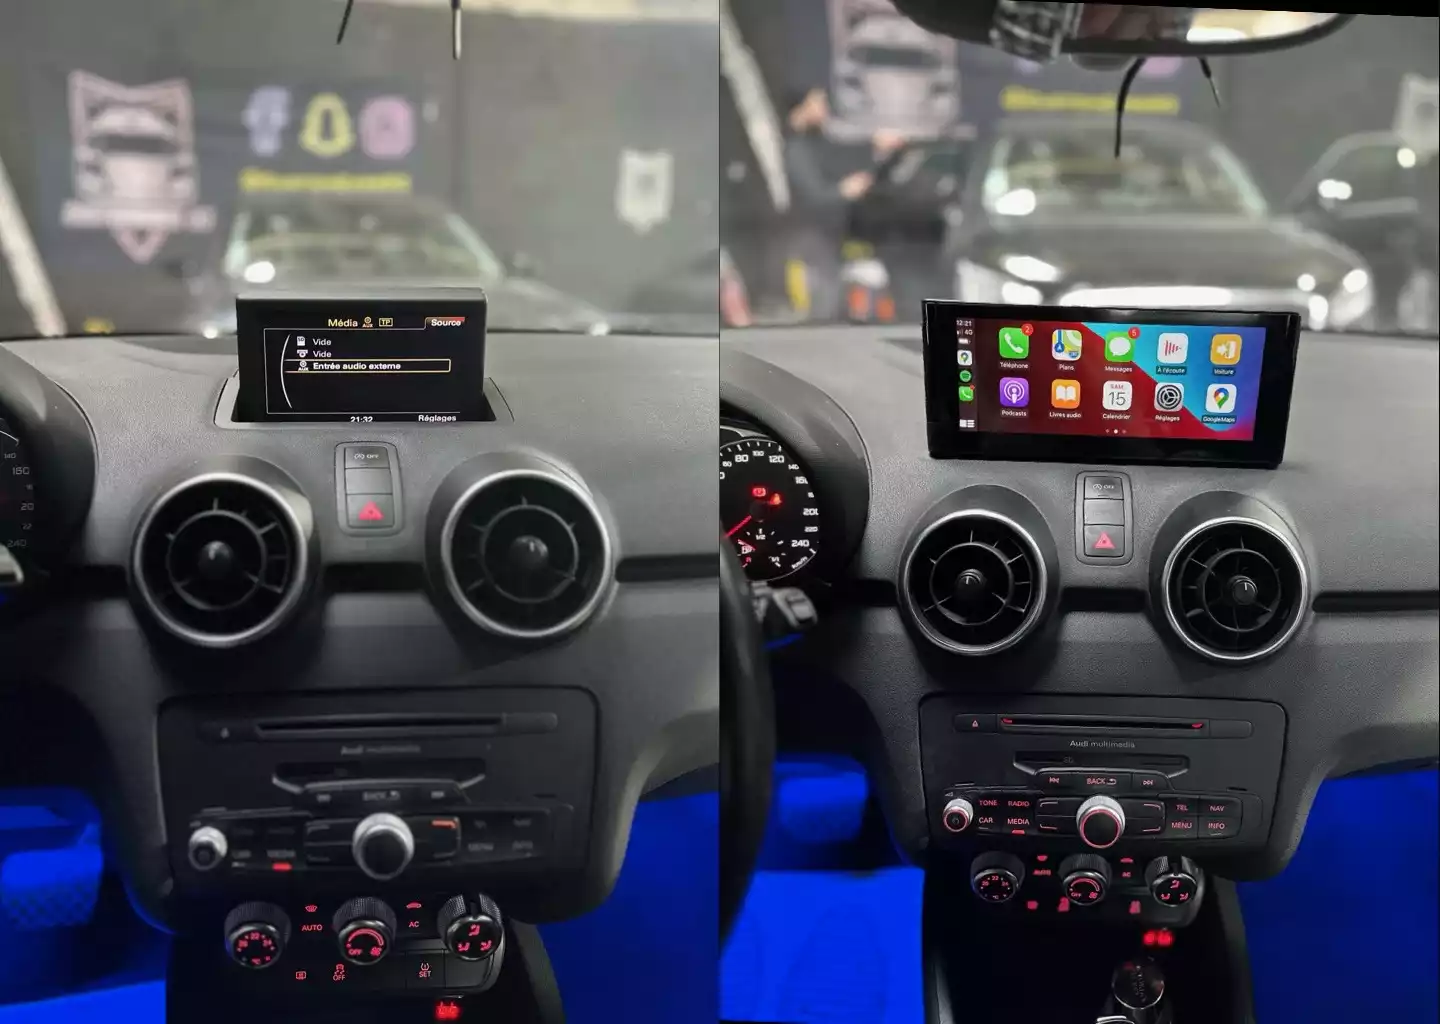 Avis et commentaires de Autoradio tactile GPS et Apple Carplay Fiat Bravo -  HighTech-Privee